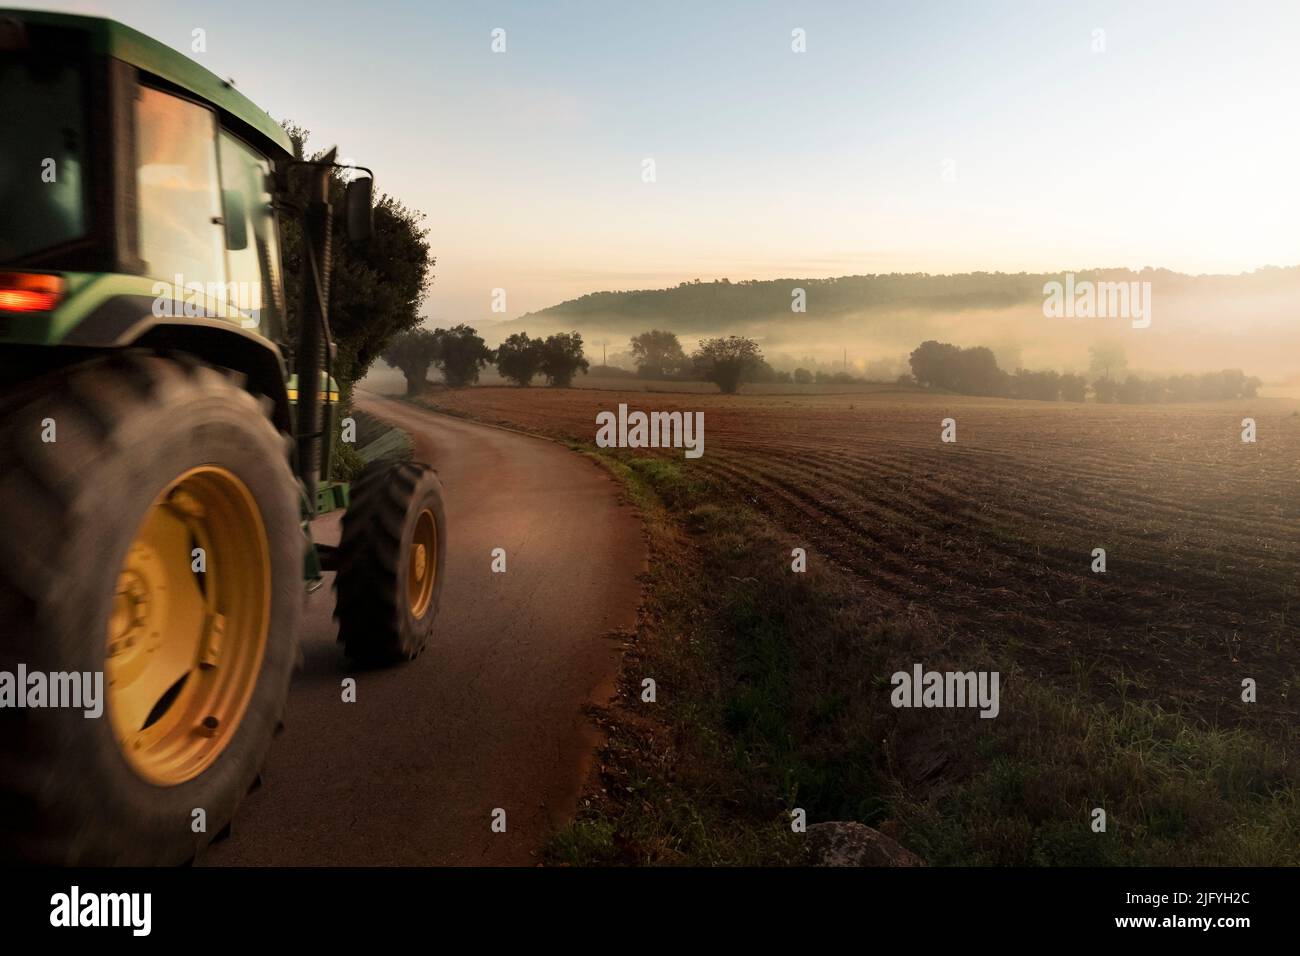 Field tractor riding through farm road at dawn Stock Photo